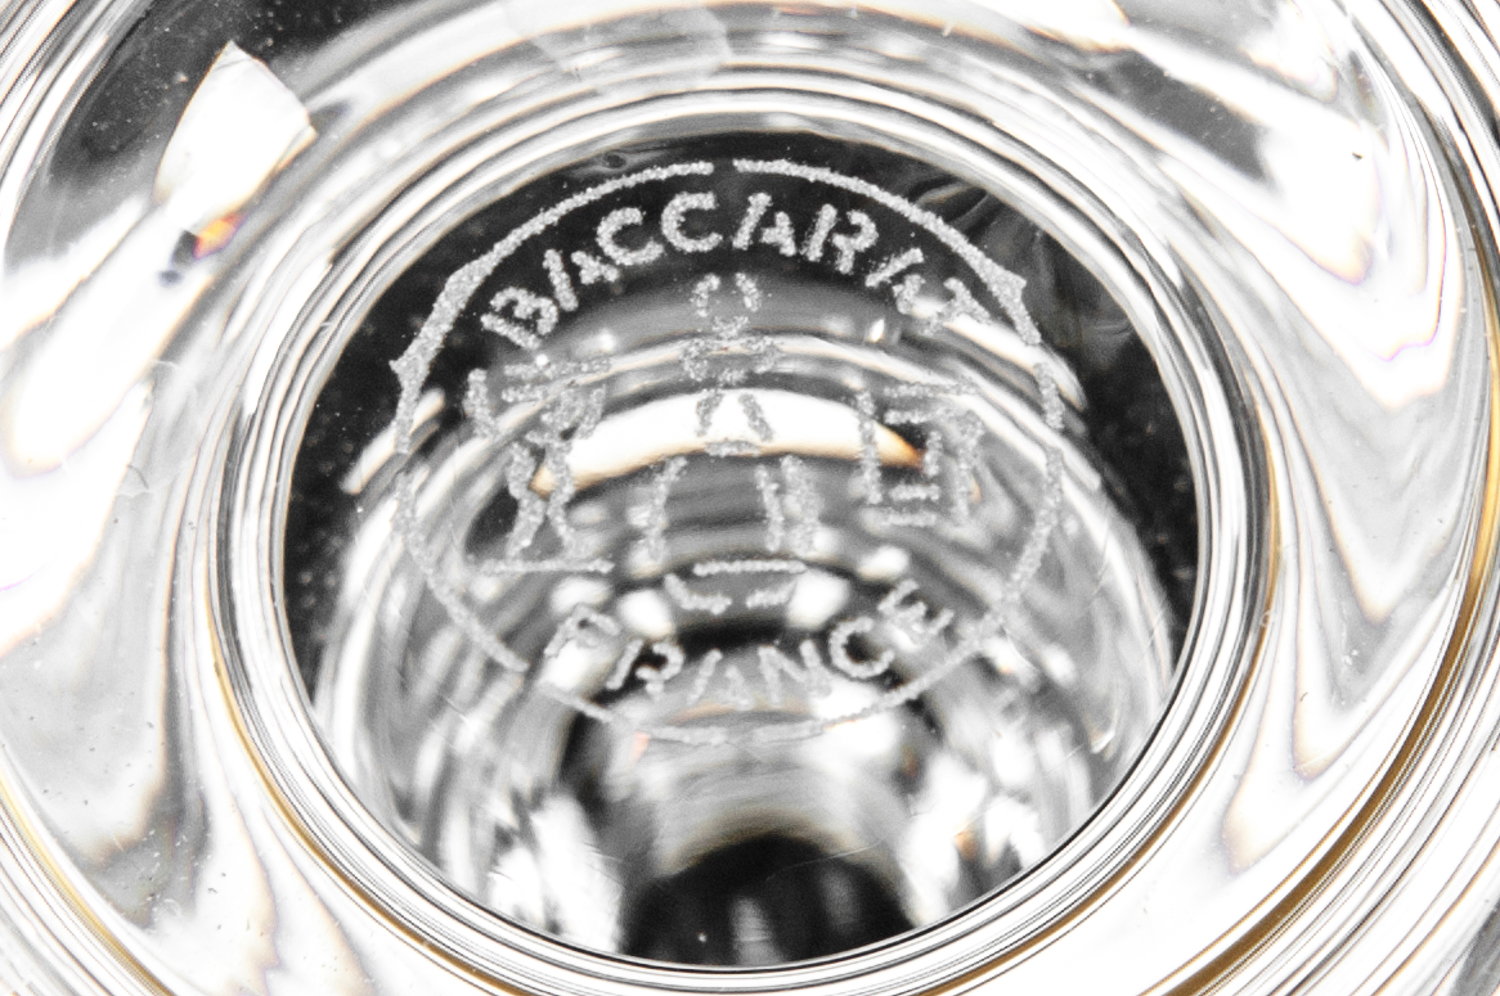 Vintage Baccarat Crystal Wine Glasses. — La Maison Supreme Ltd.